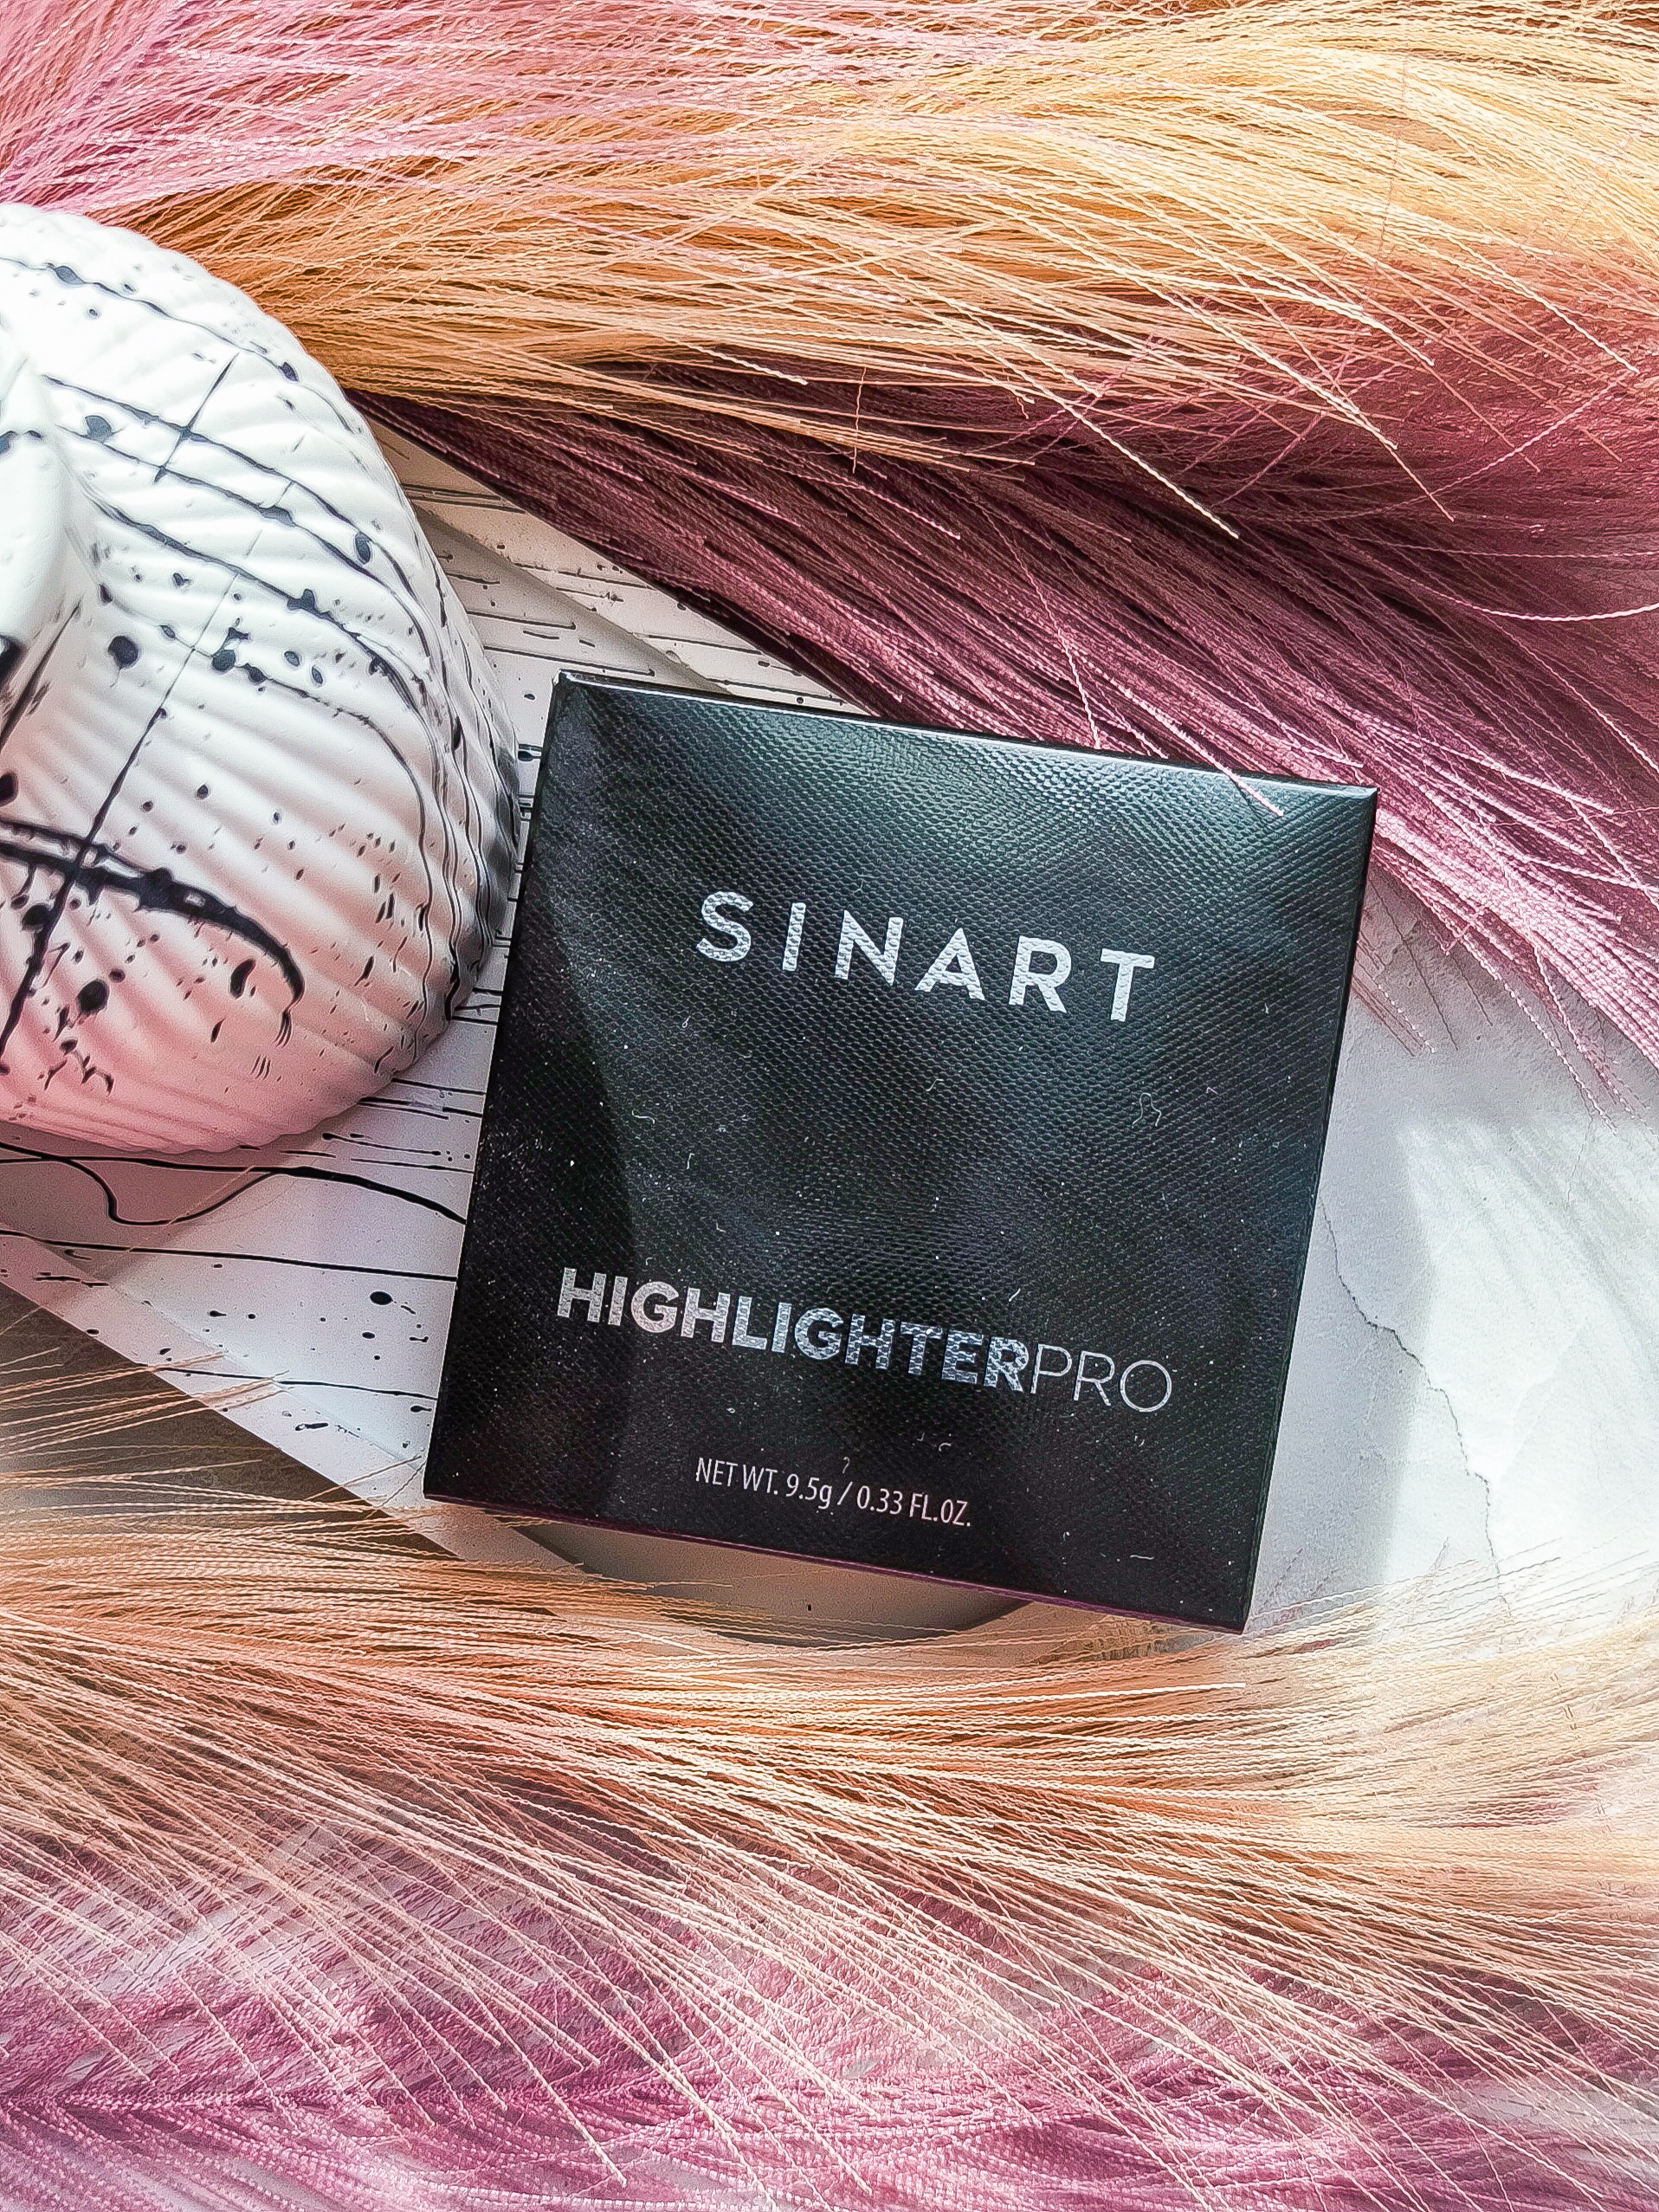 Shine bright like a diamond | Sinart Highlighterpro